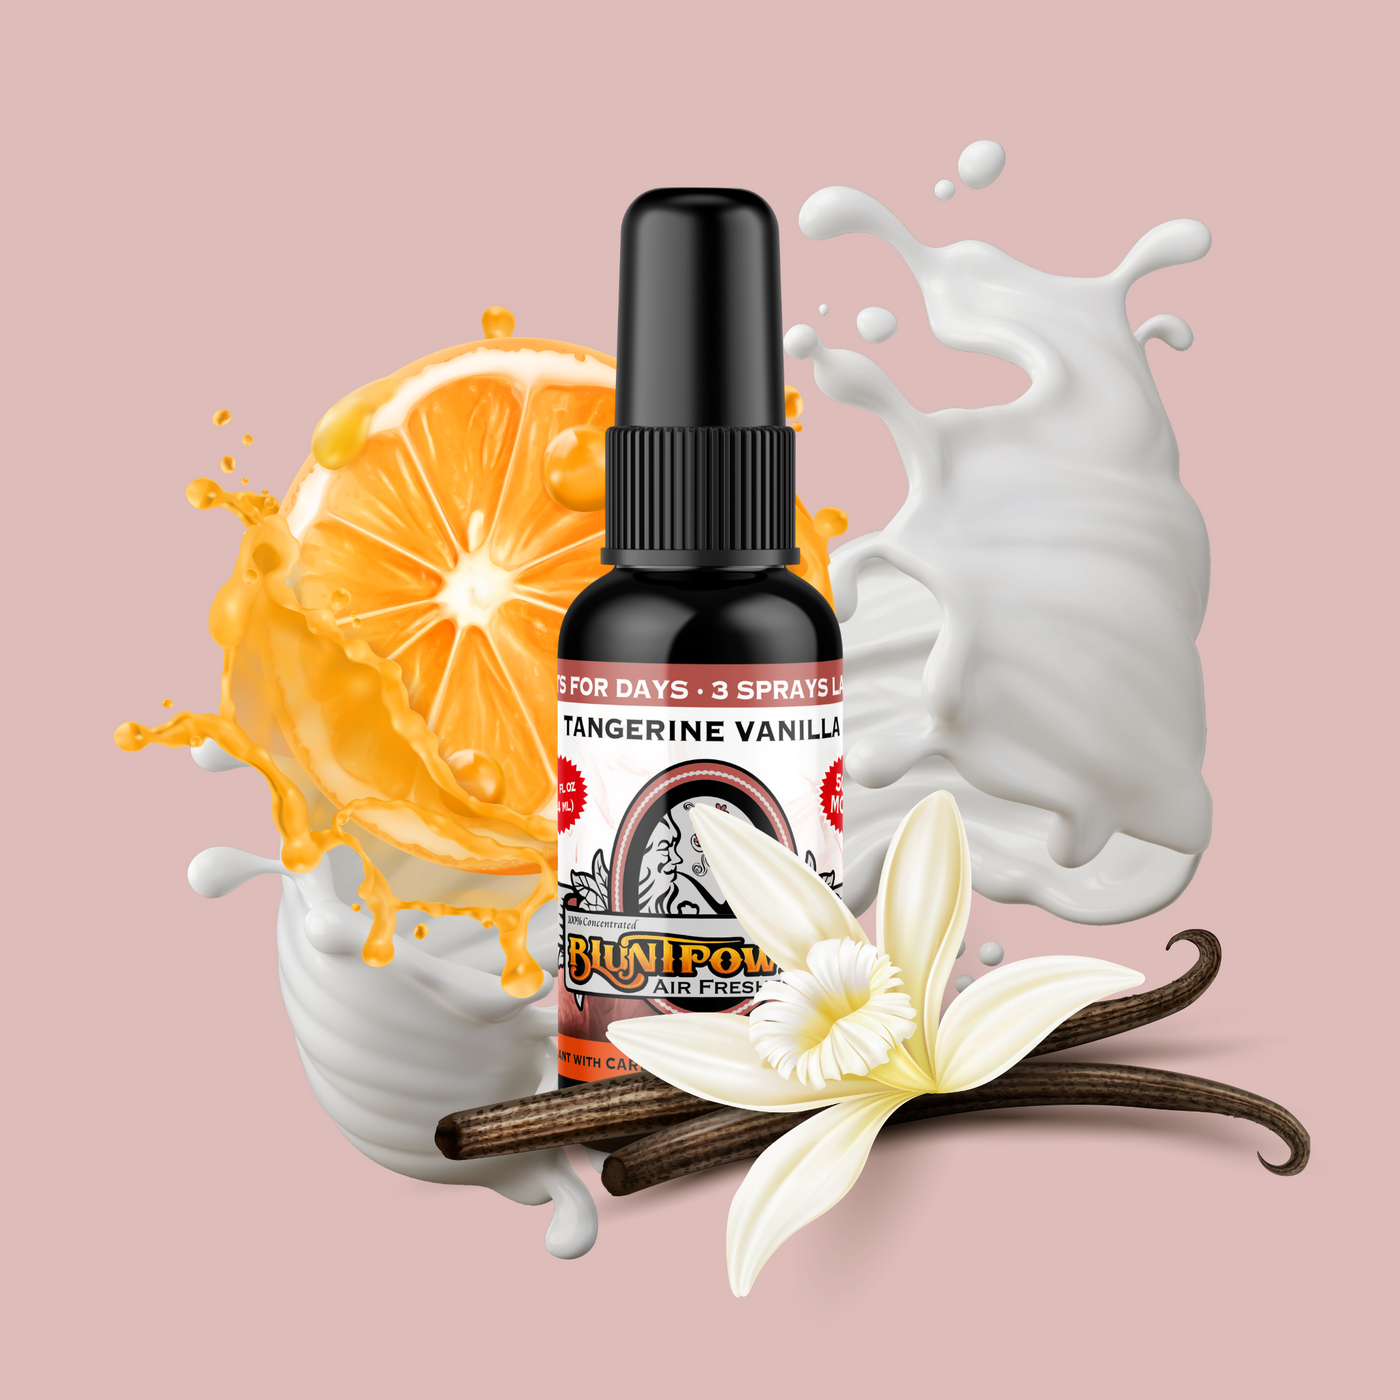 Tangerine Vanilla Air Freshener Spray